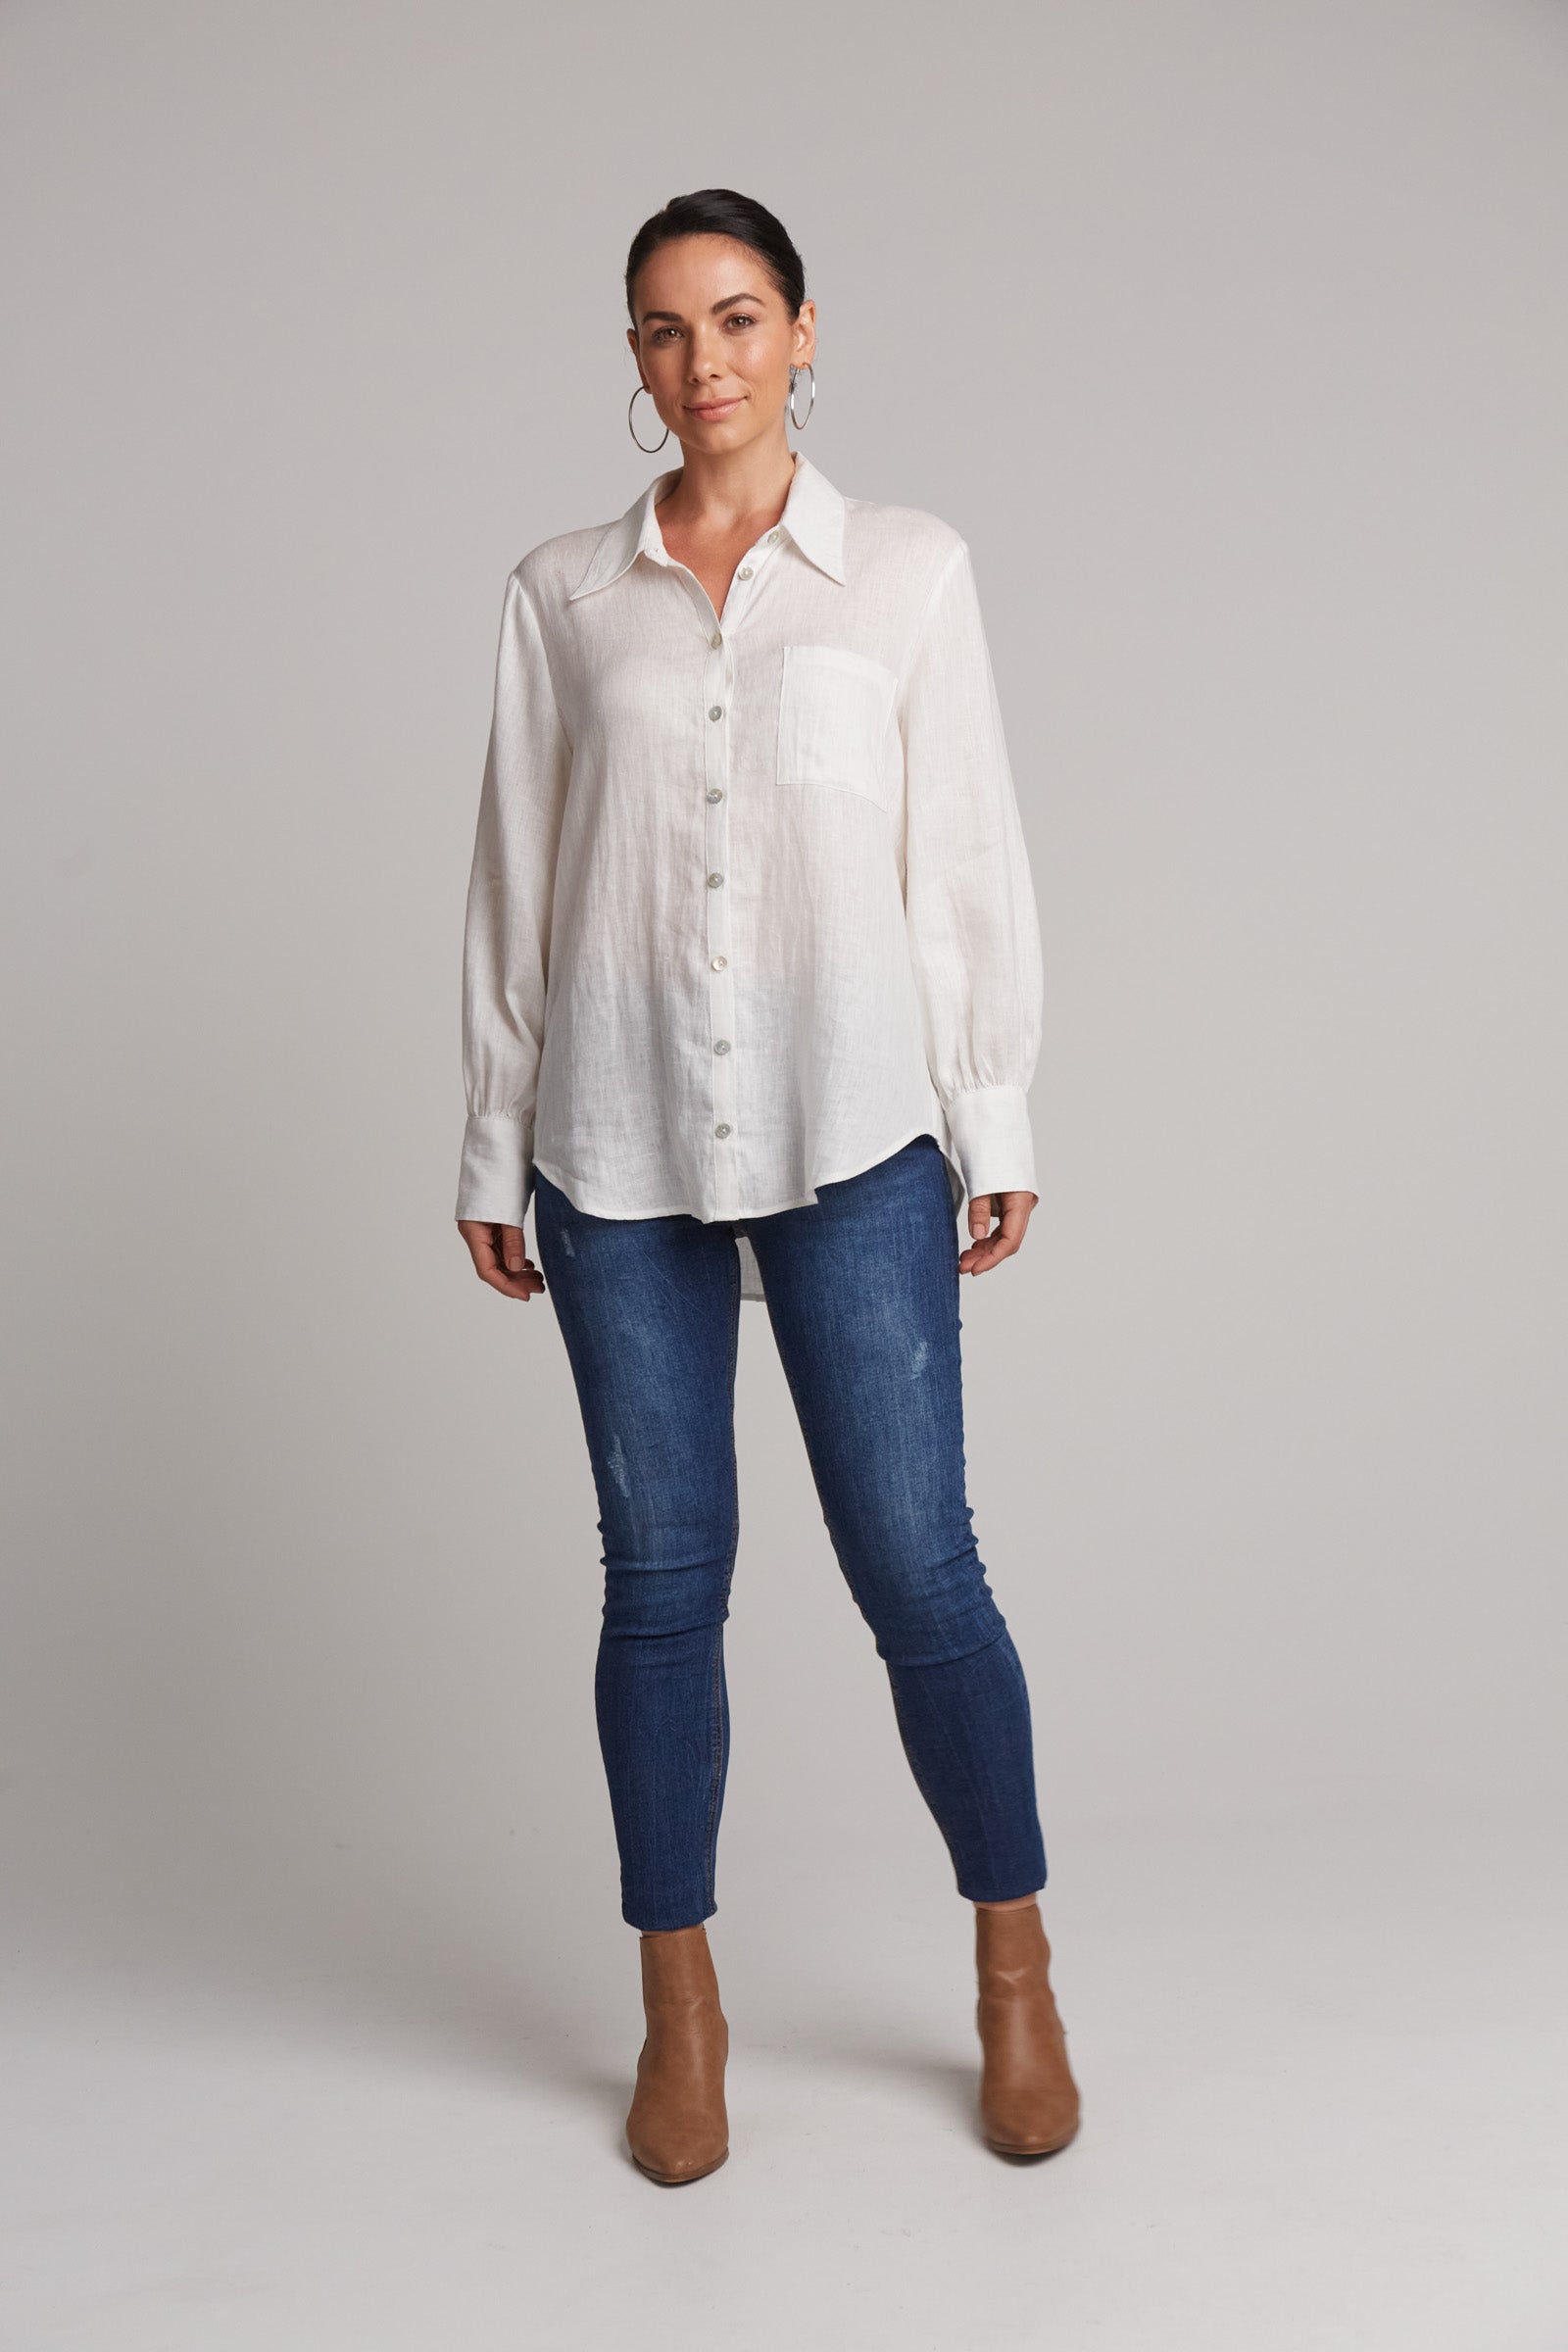 Studio Shirt - Salt - eb&ive Clothing - Shirt L/S Linen